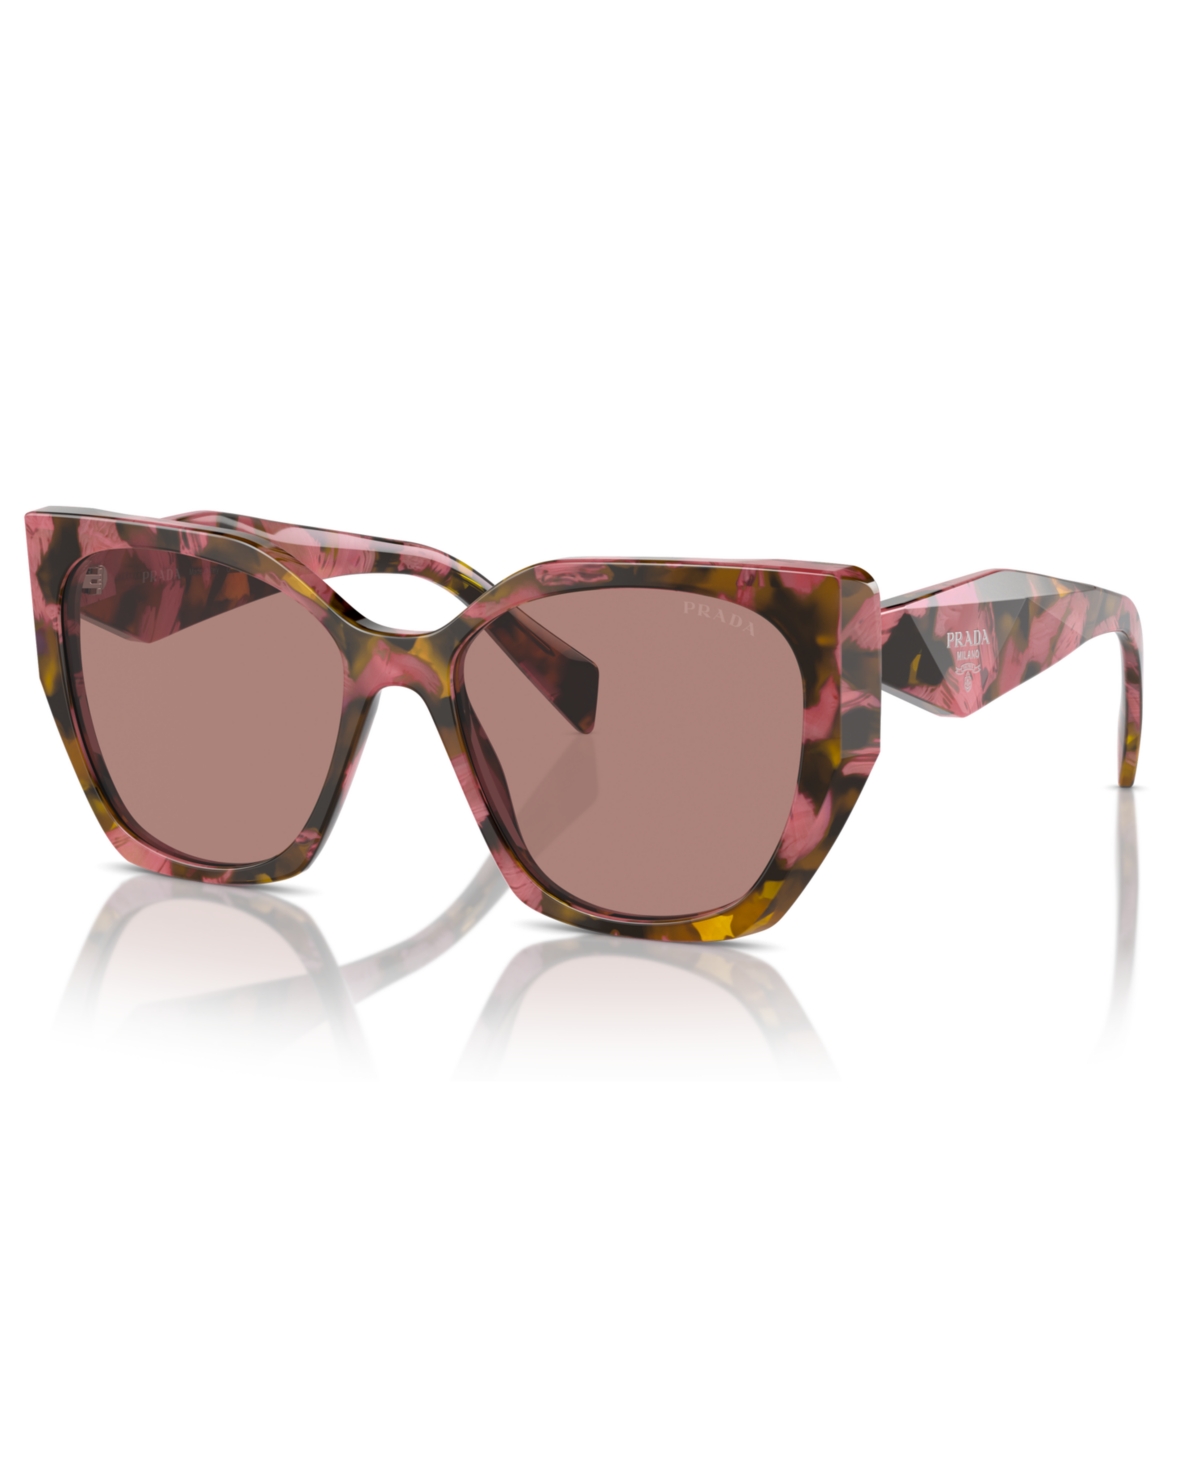 Prada Women's Sunglasses, Pr 19zs In Light Brown